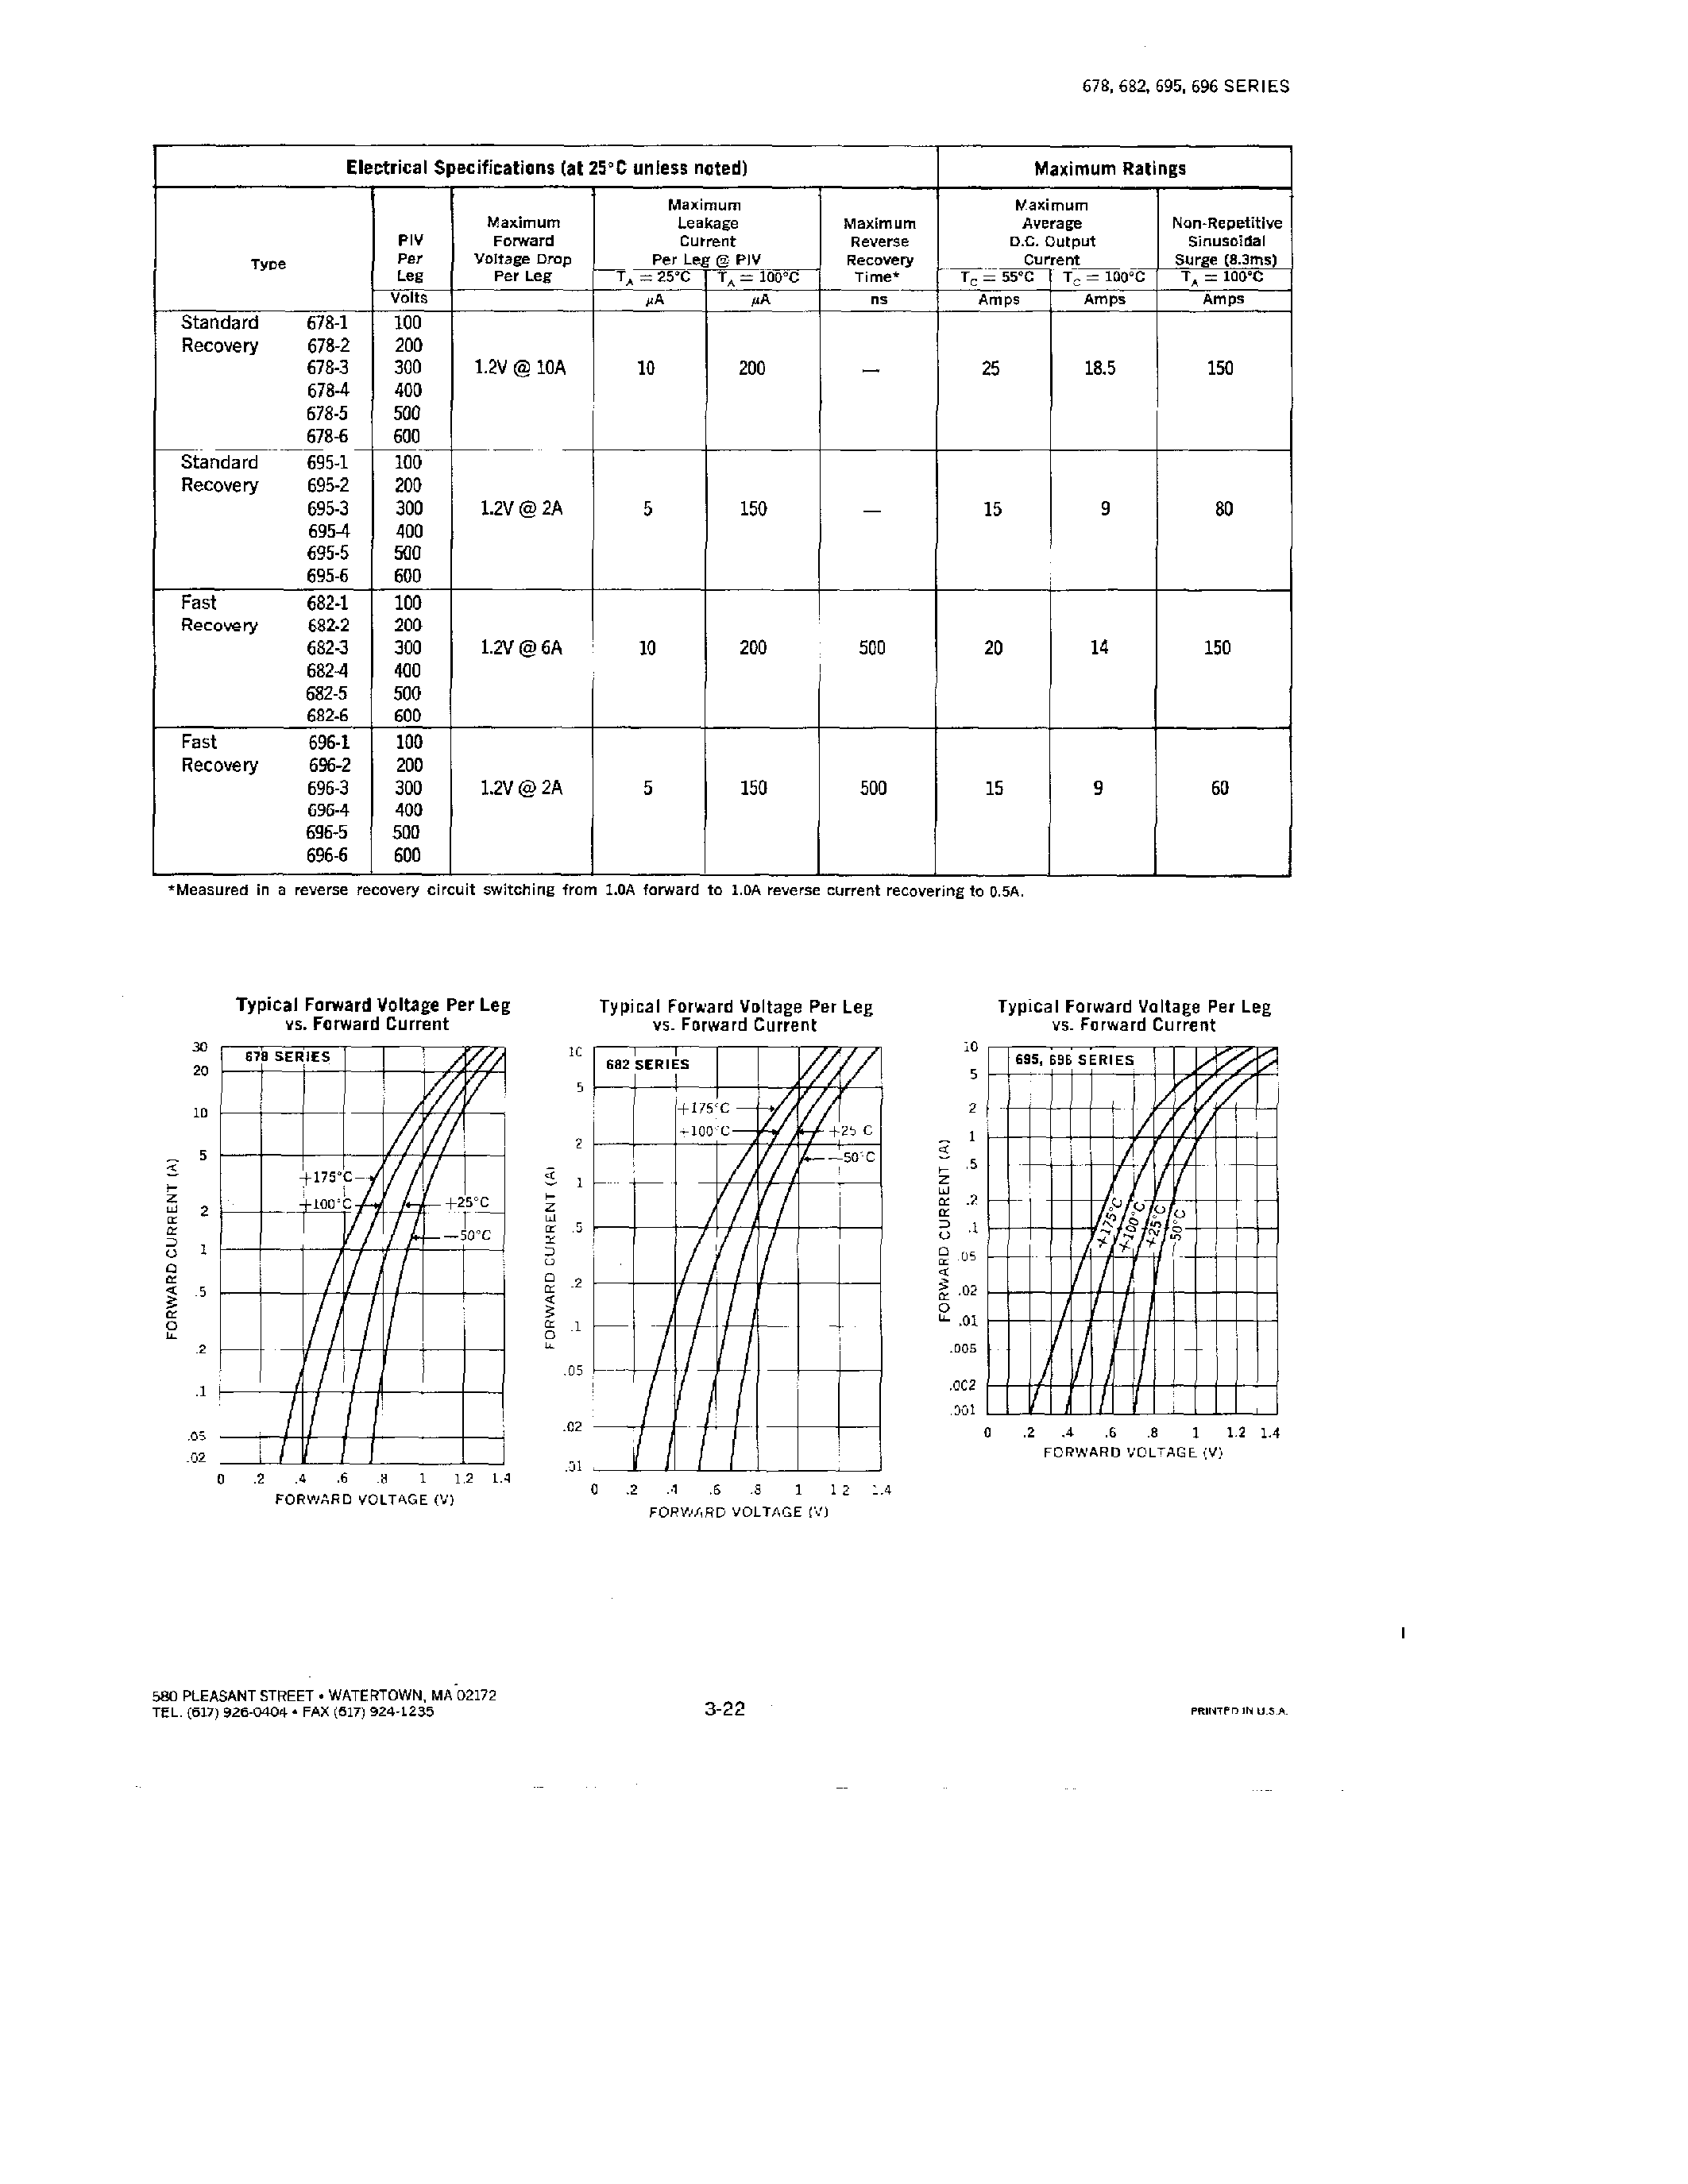 Datasheet 695-6 - RECTIFIERS ASSEMBLIES page 2